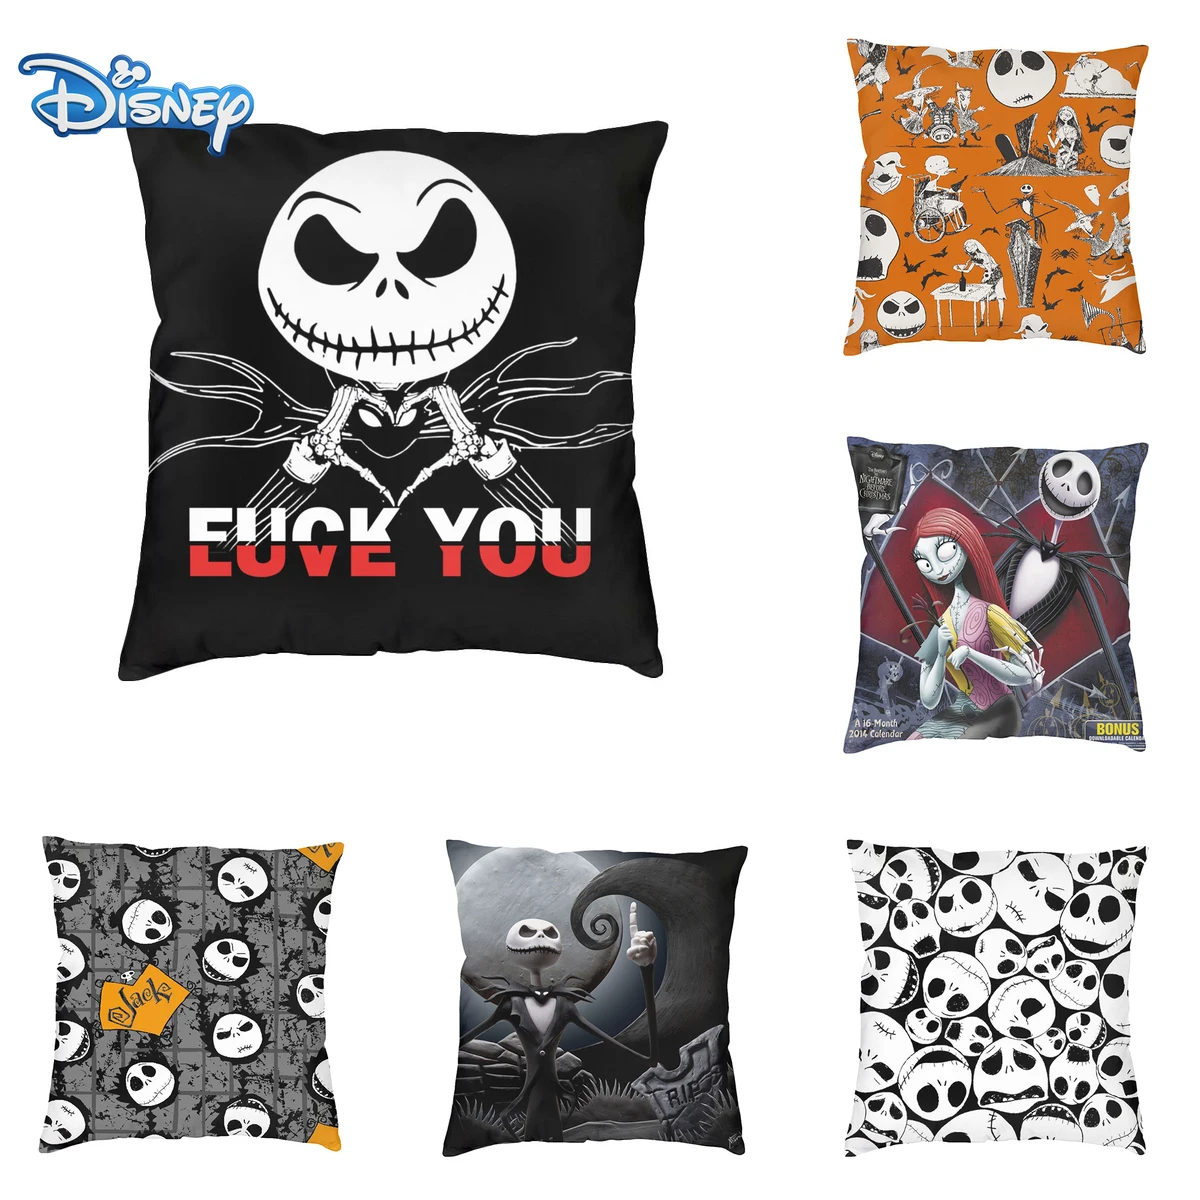 

Disney Cartoon Cushion Cover The Nightmare Before Christmas PillowCase Decorative/Nap Room Sofa Decorative pillows Gift